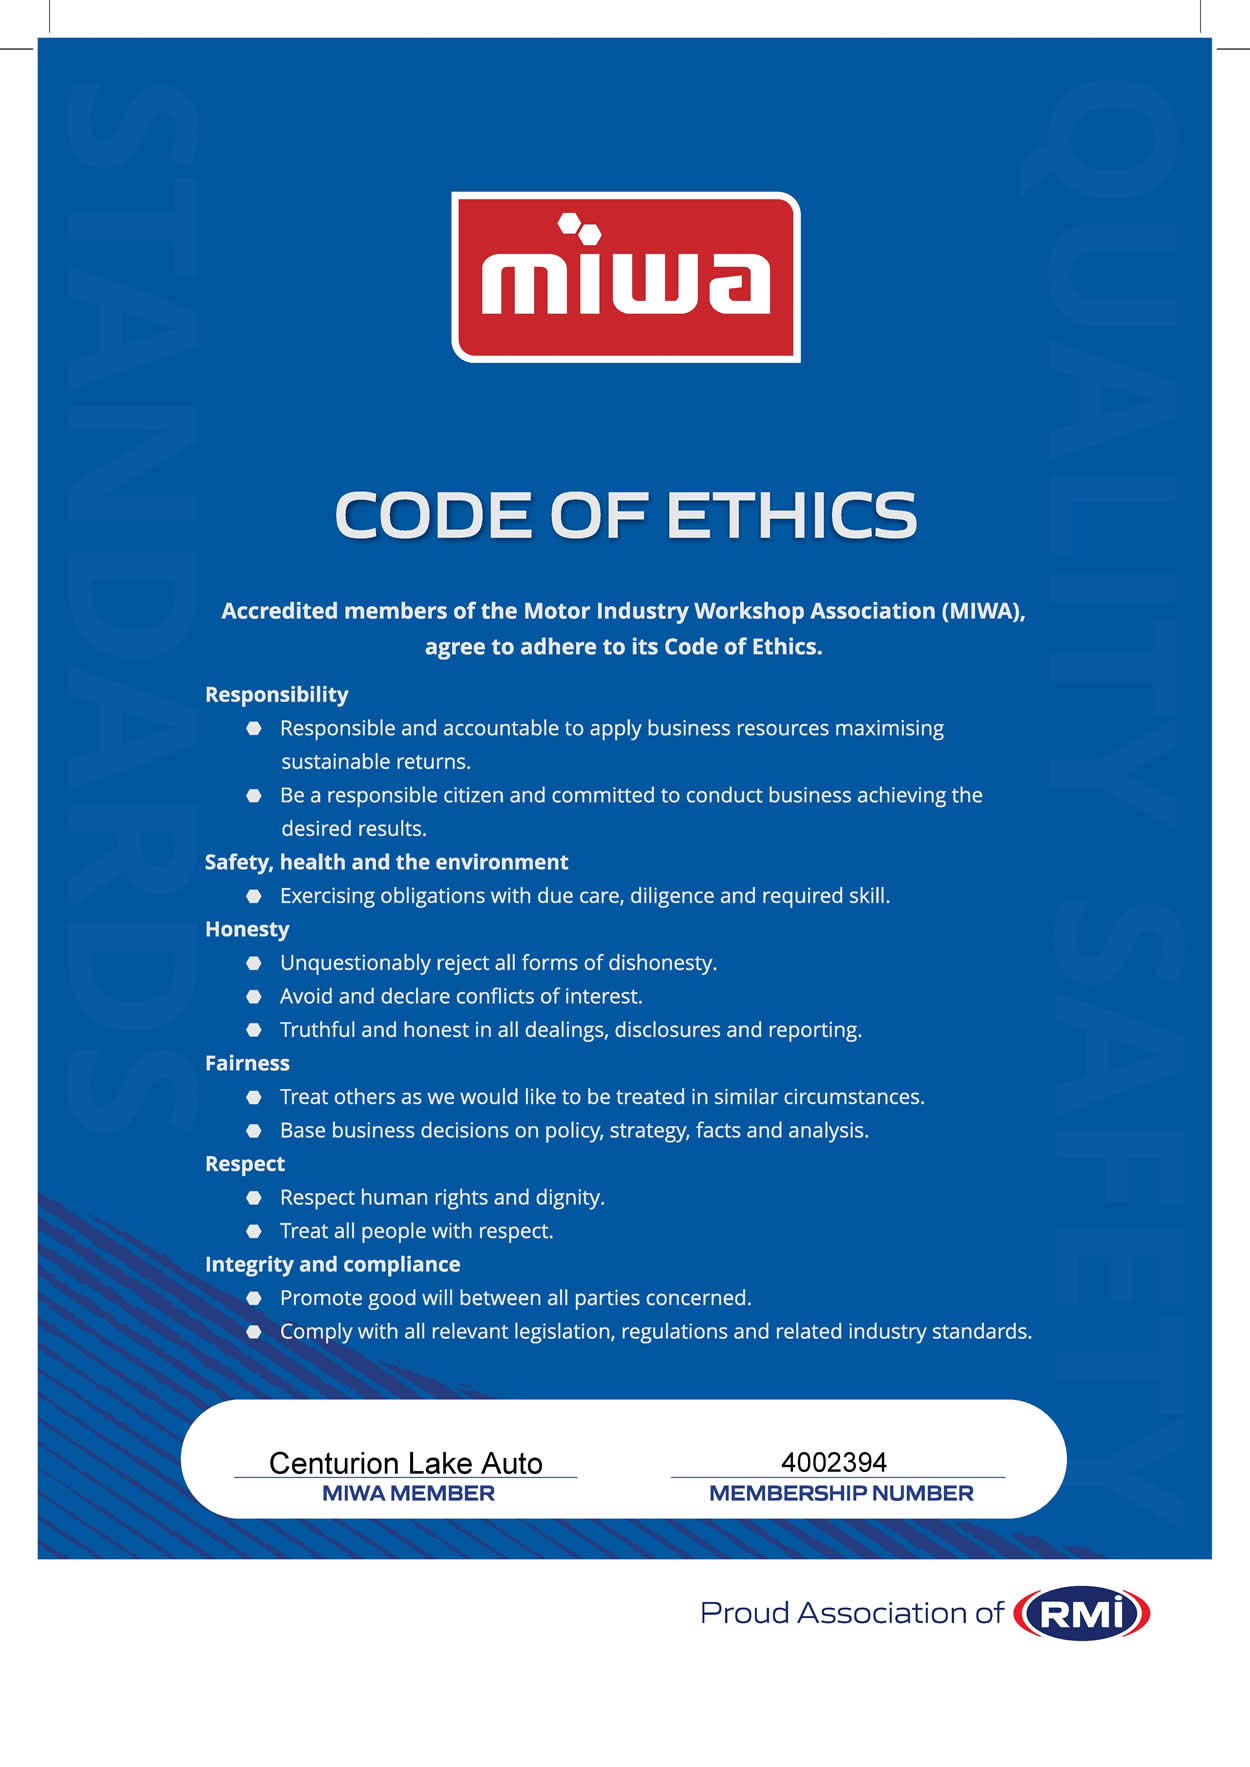 centurion lake auto repairs and service miwa code of ethics 2021